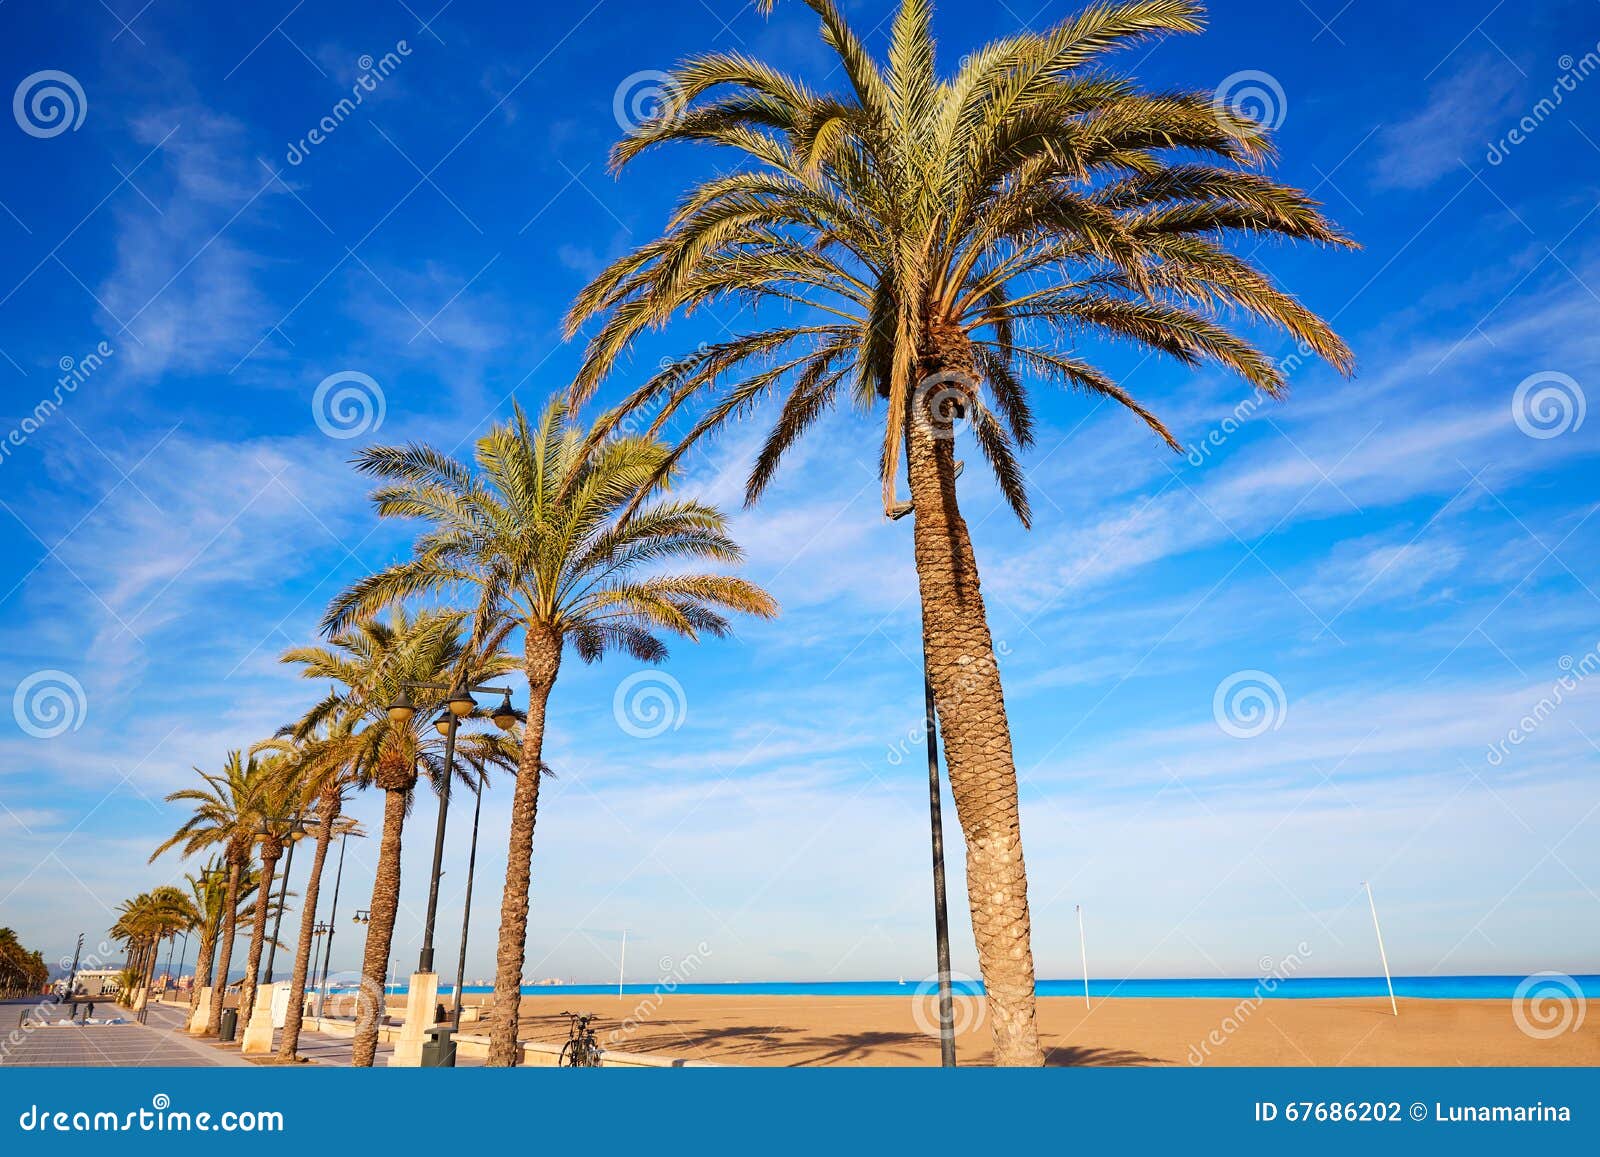 valencia la malvarrosa beach palm trees spain